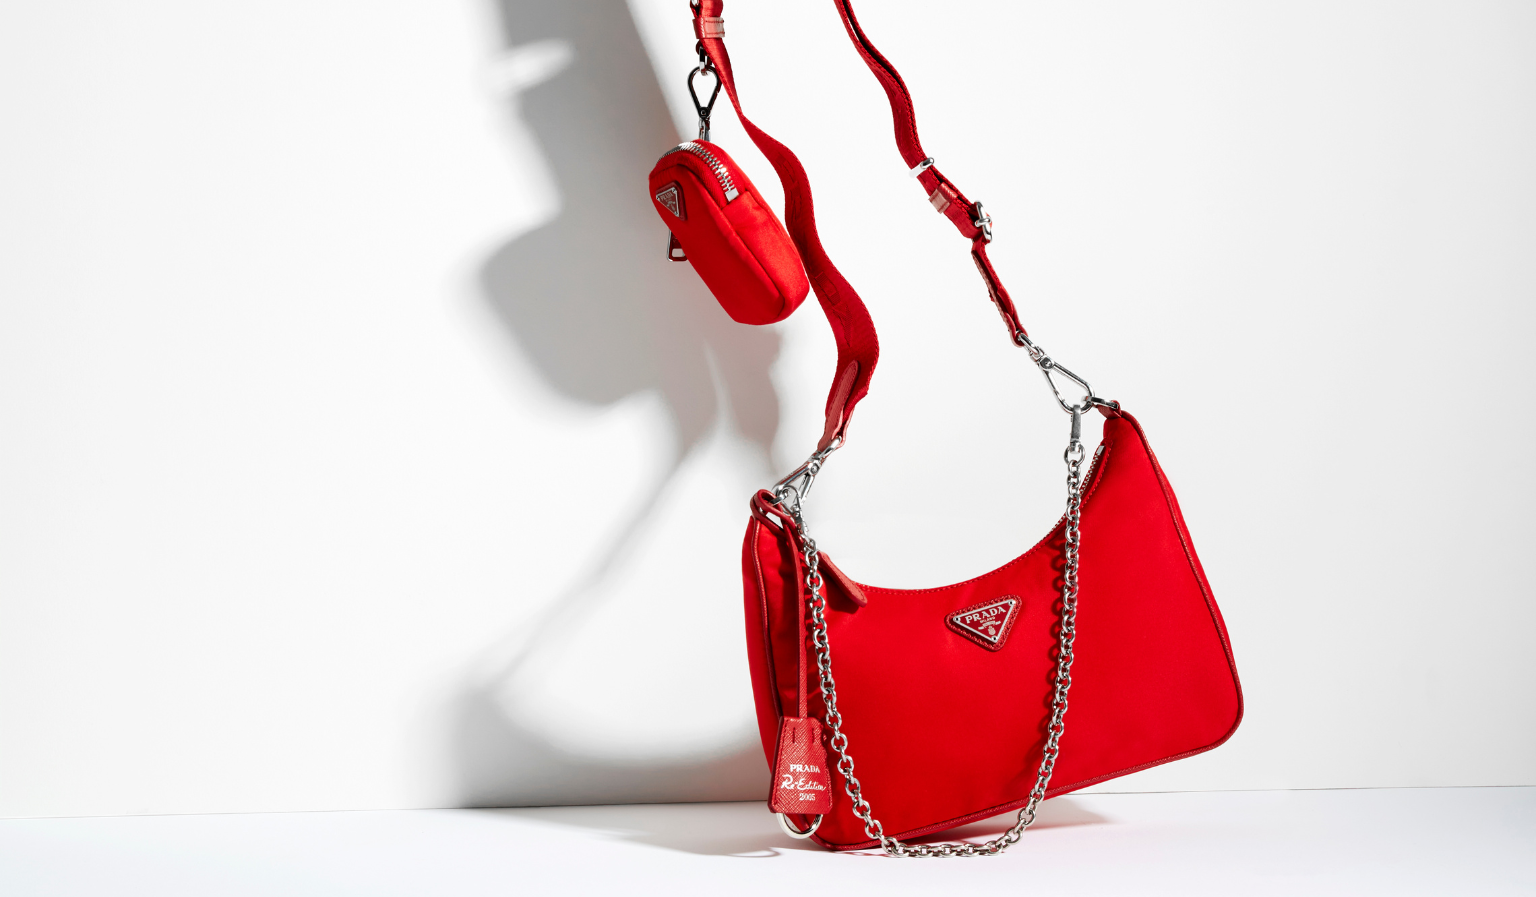 Gucci, Louis Vuitton, Prada and more: Vintage handbags at Century